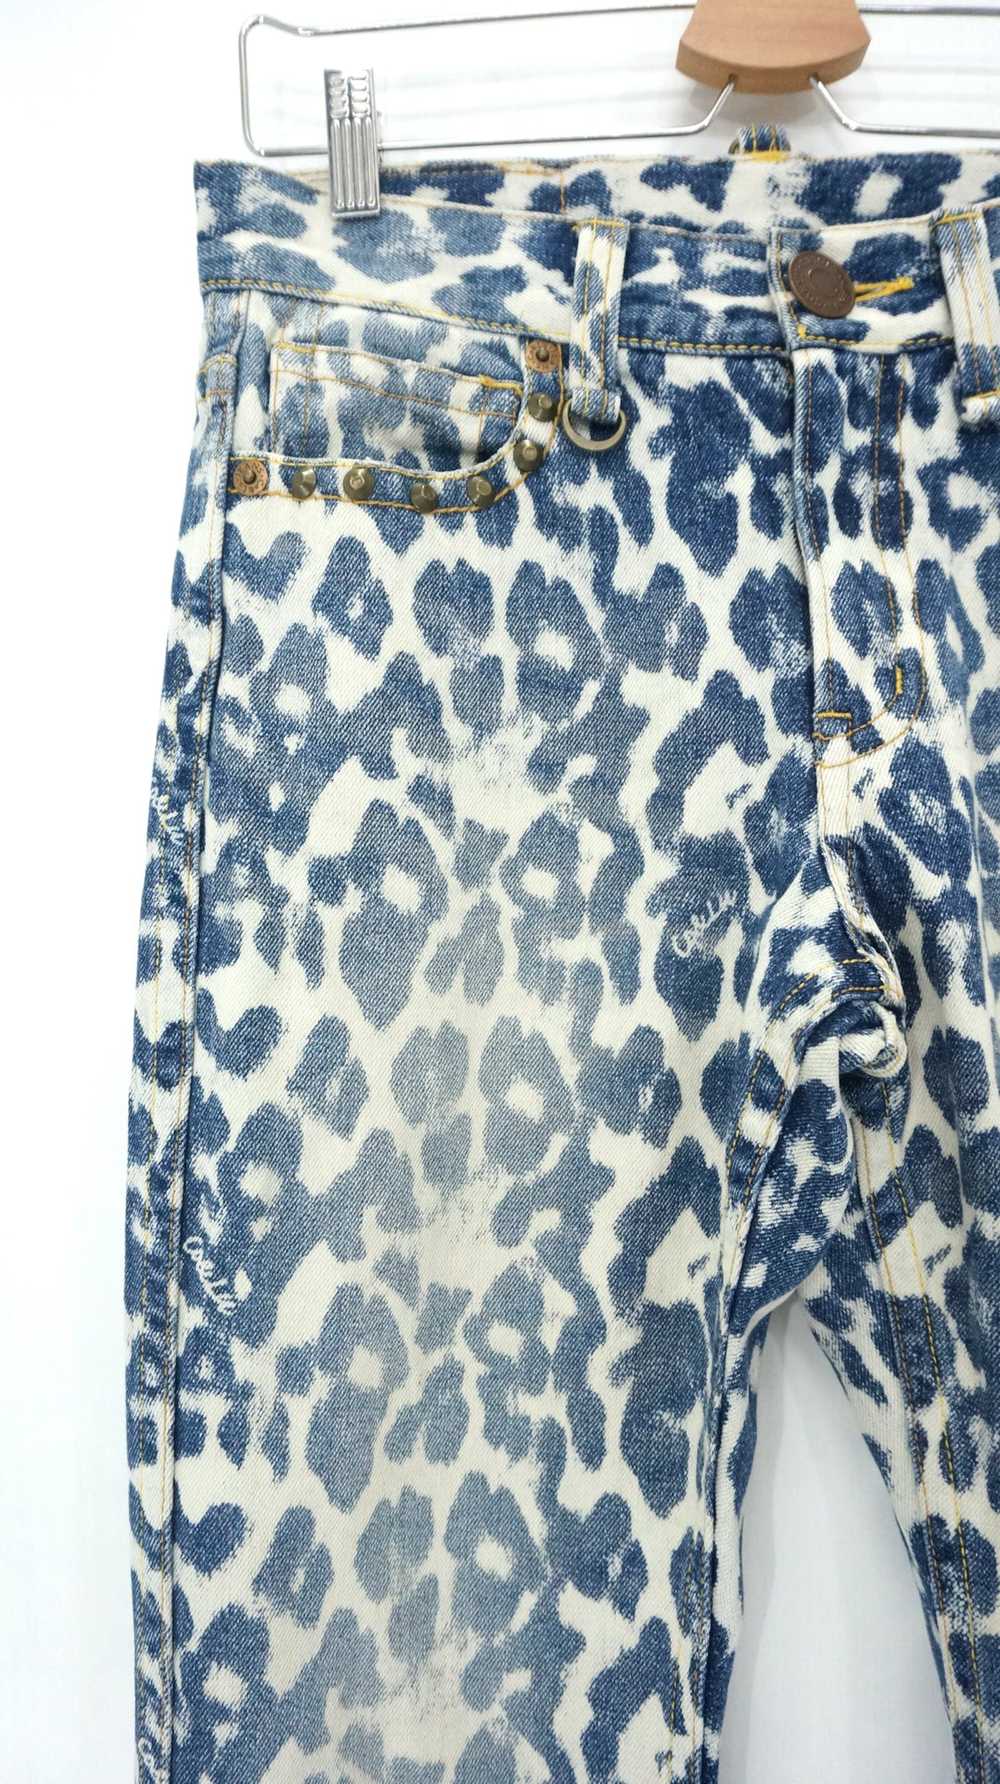 Japanese Brand CO & LU Leopard Print Jeans - image 4